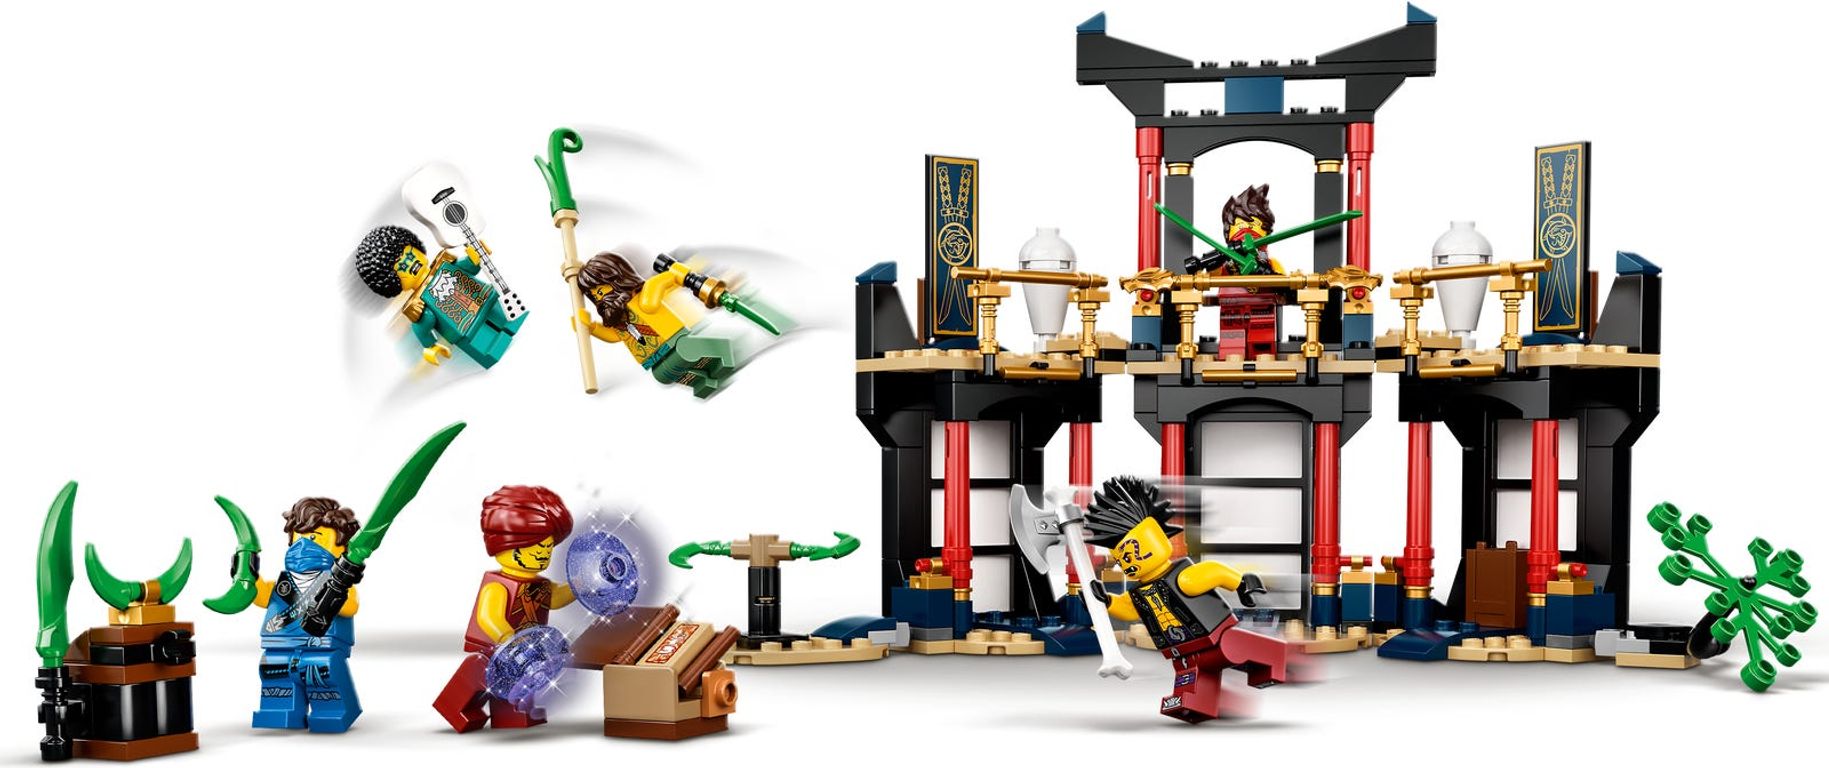 LEGO® Ninjago Toernooi der Elementen speelwijze